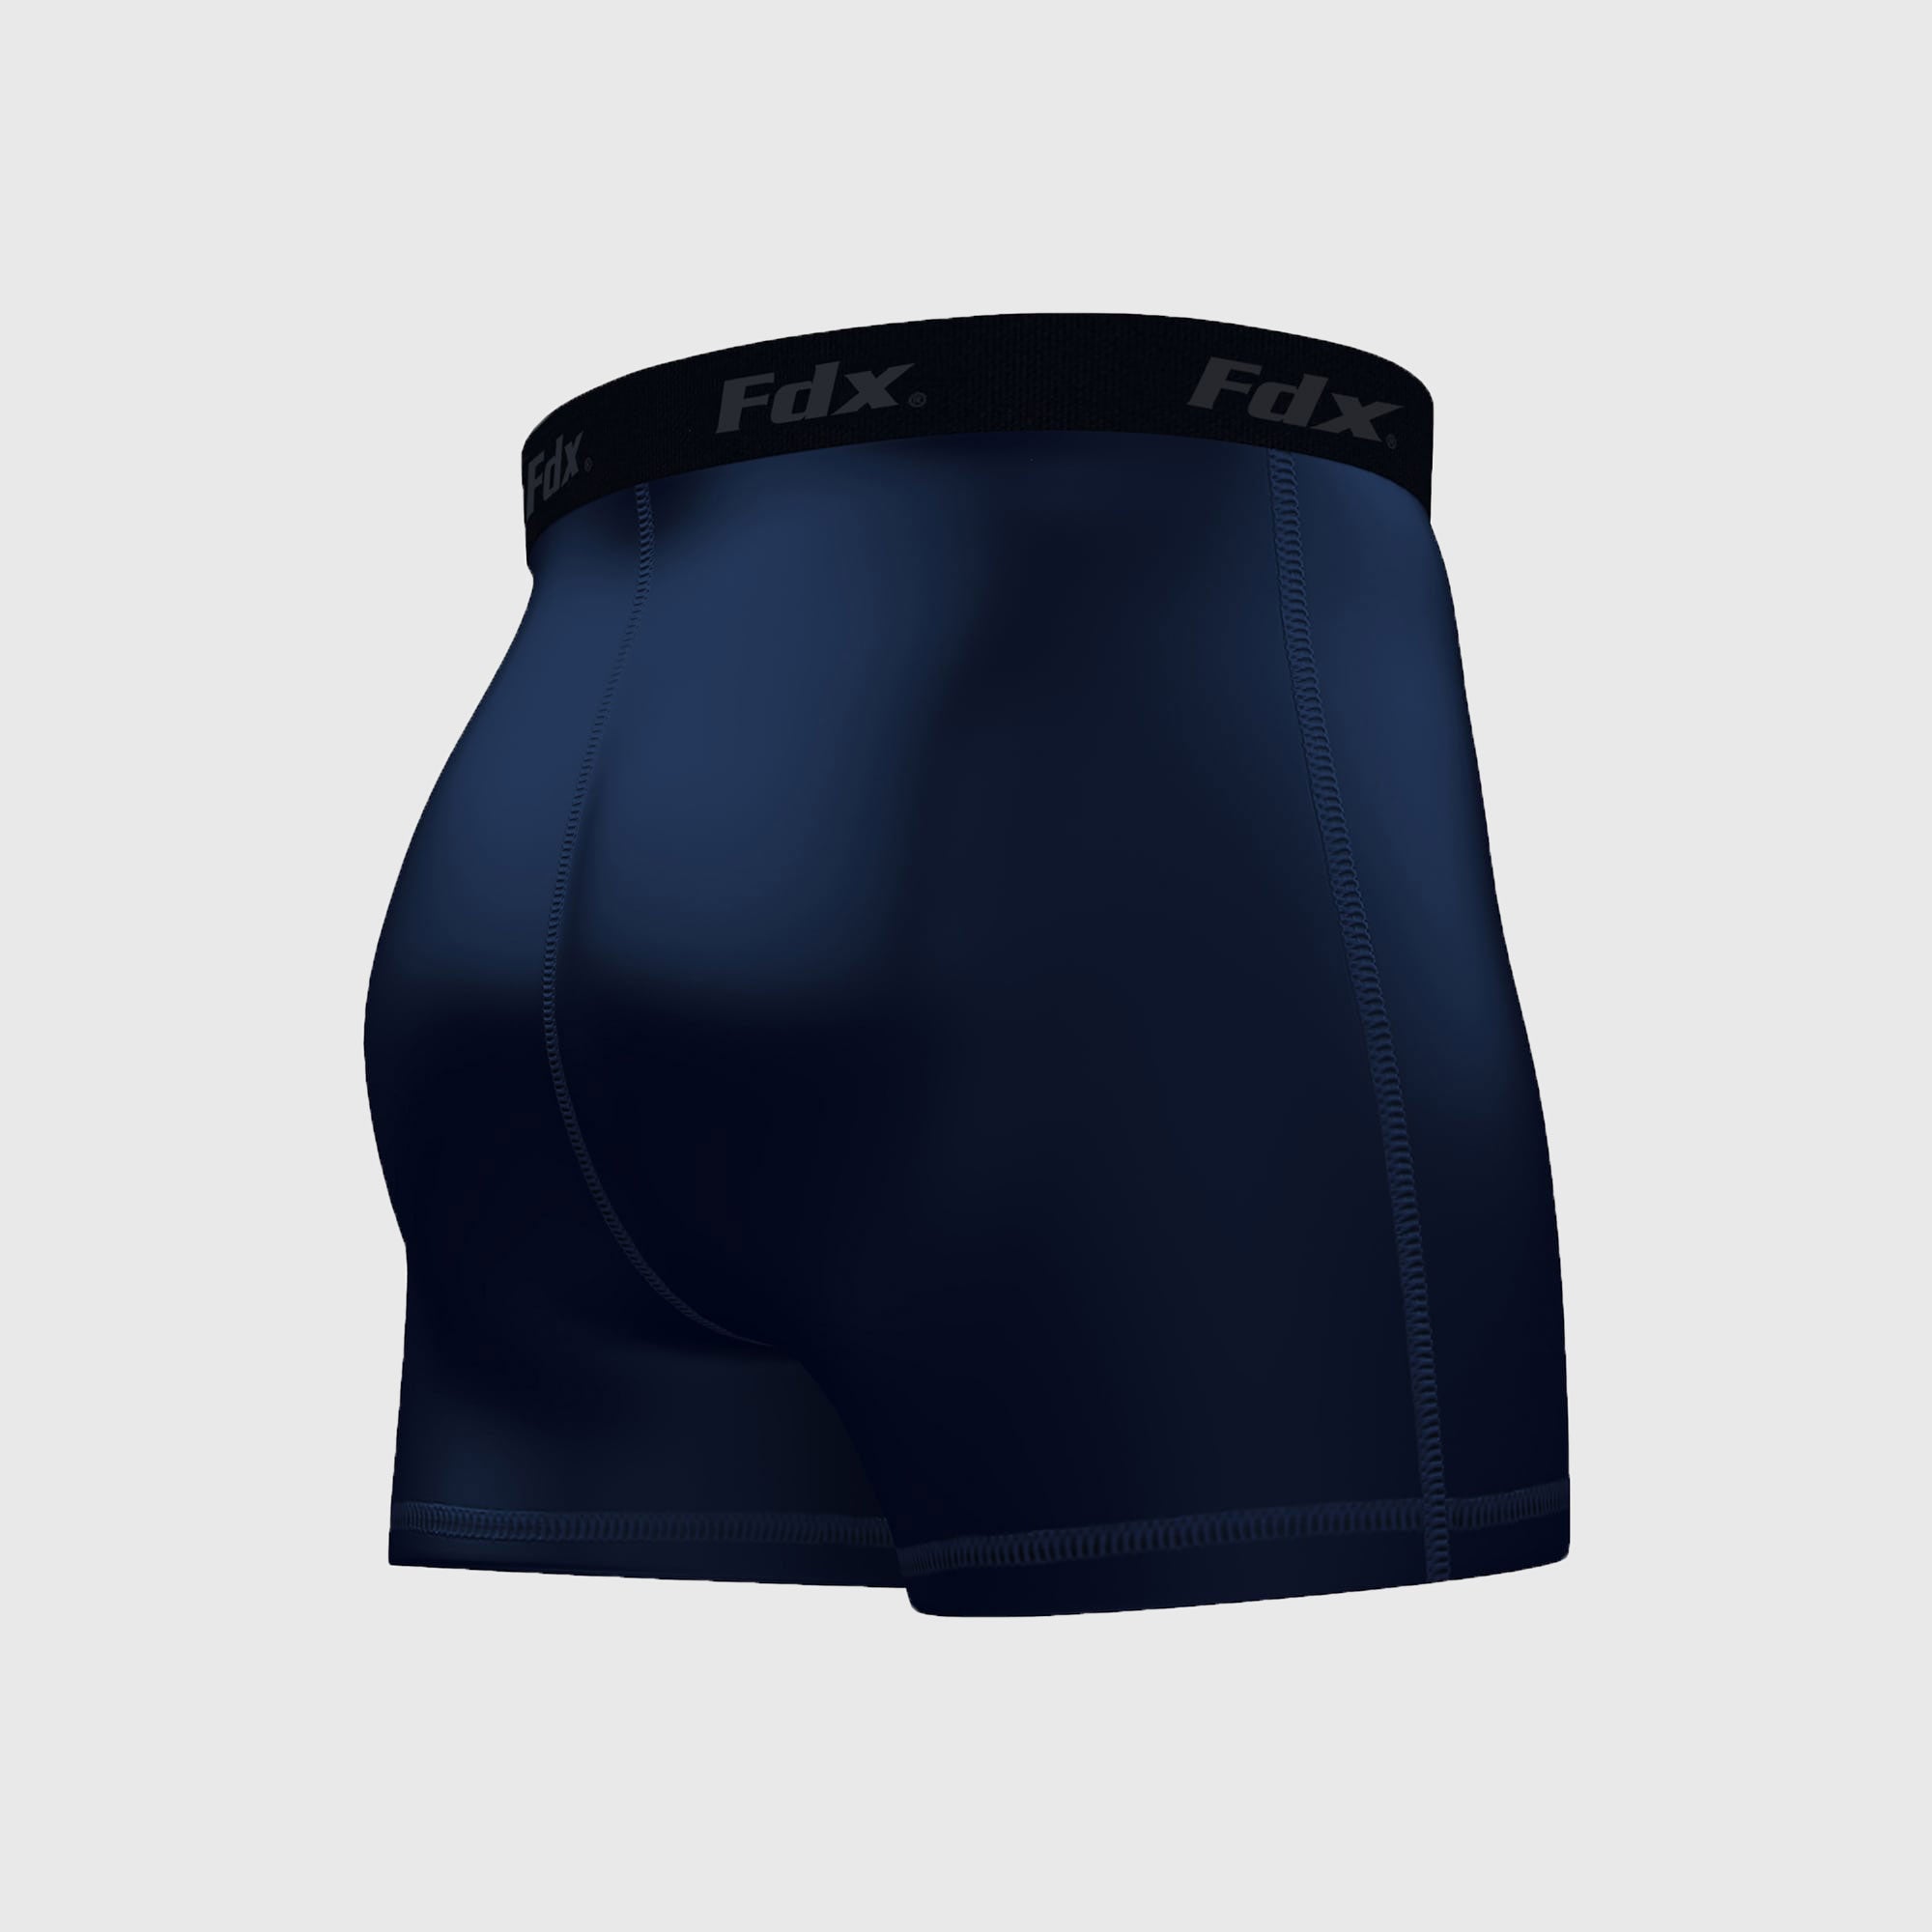 Fdx A5 Navy Blue Men's Boxer Shorts